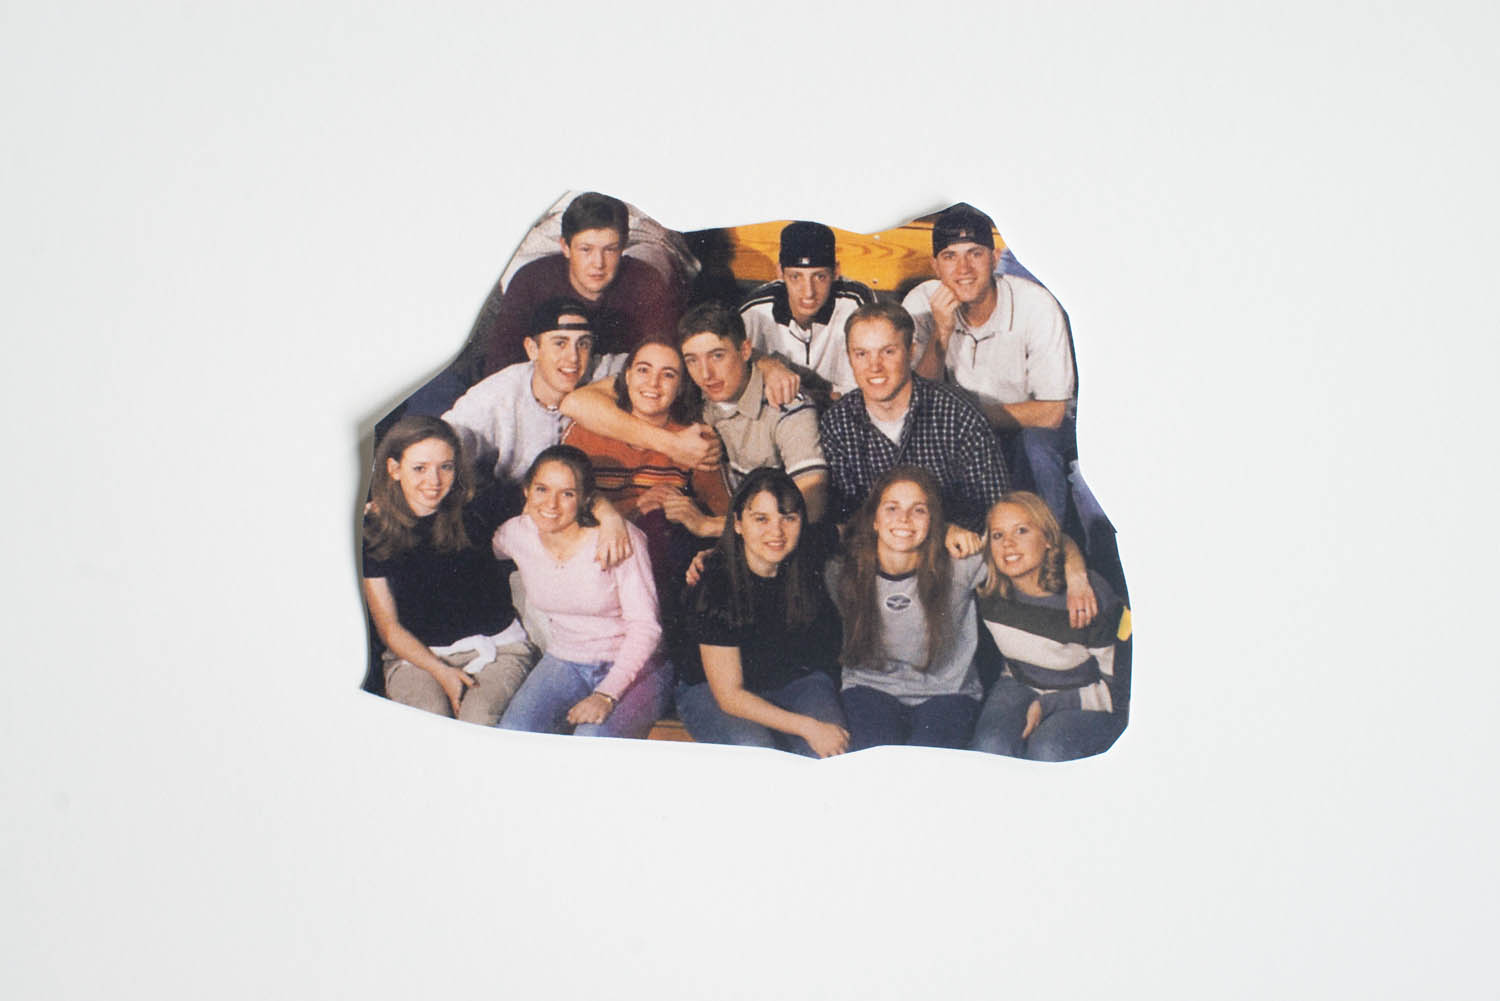 Detail from 1999 Columbine High School senior class photo.